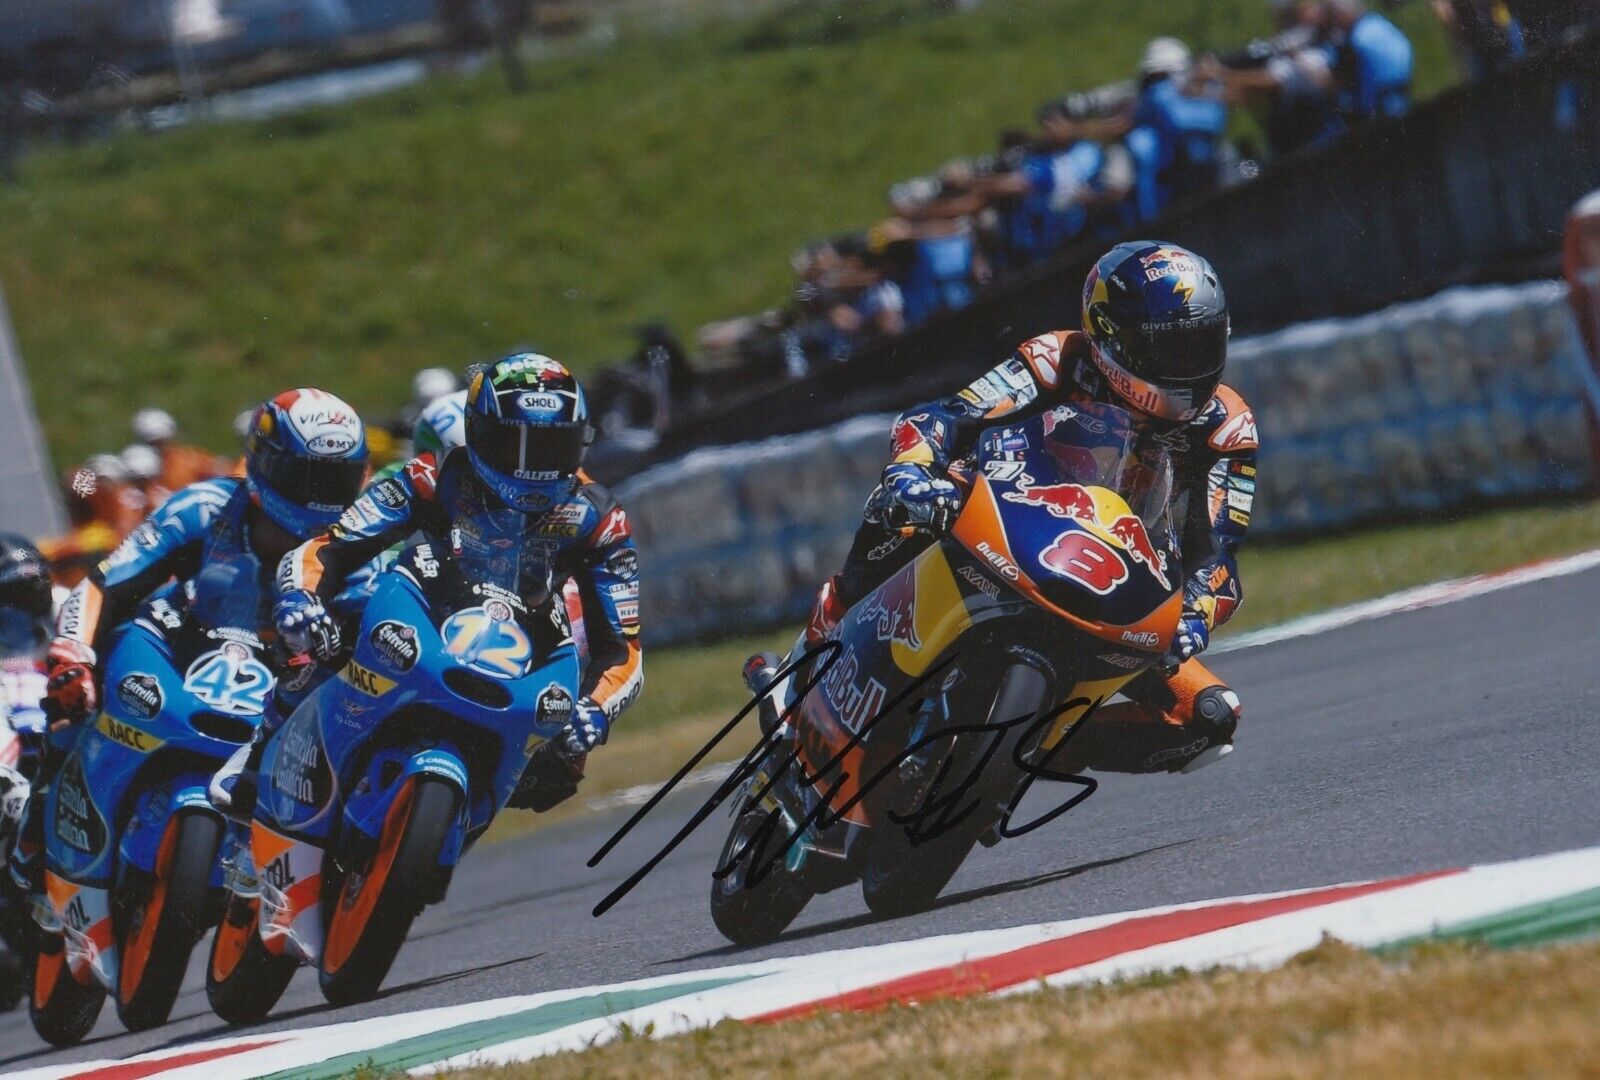 Jack Miller Hand Signed 12x8 Photo Poster painting - MotoGP Autograph 3.